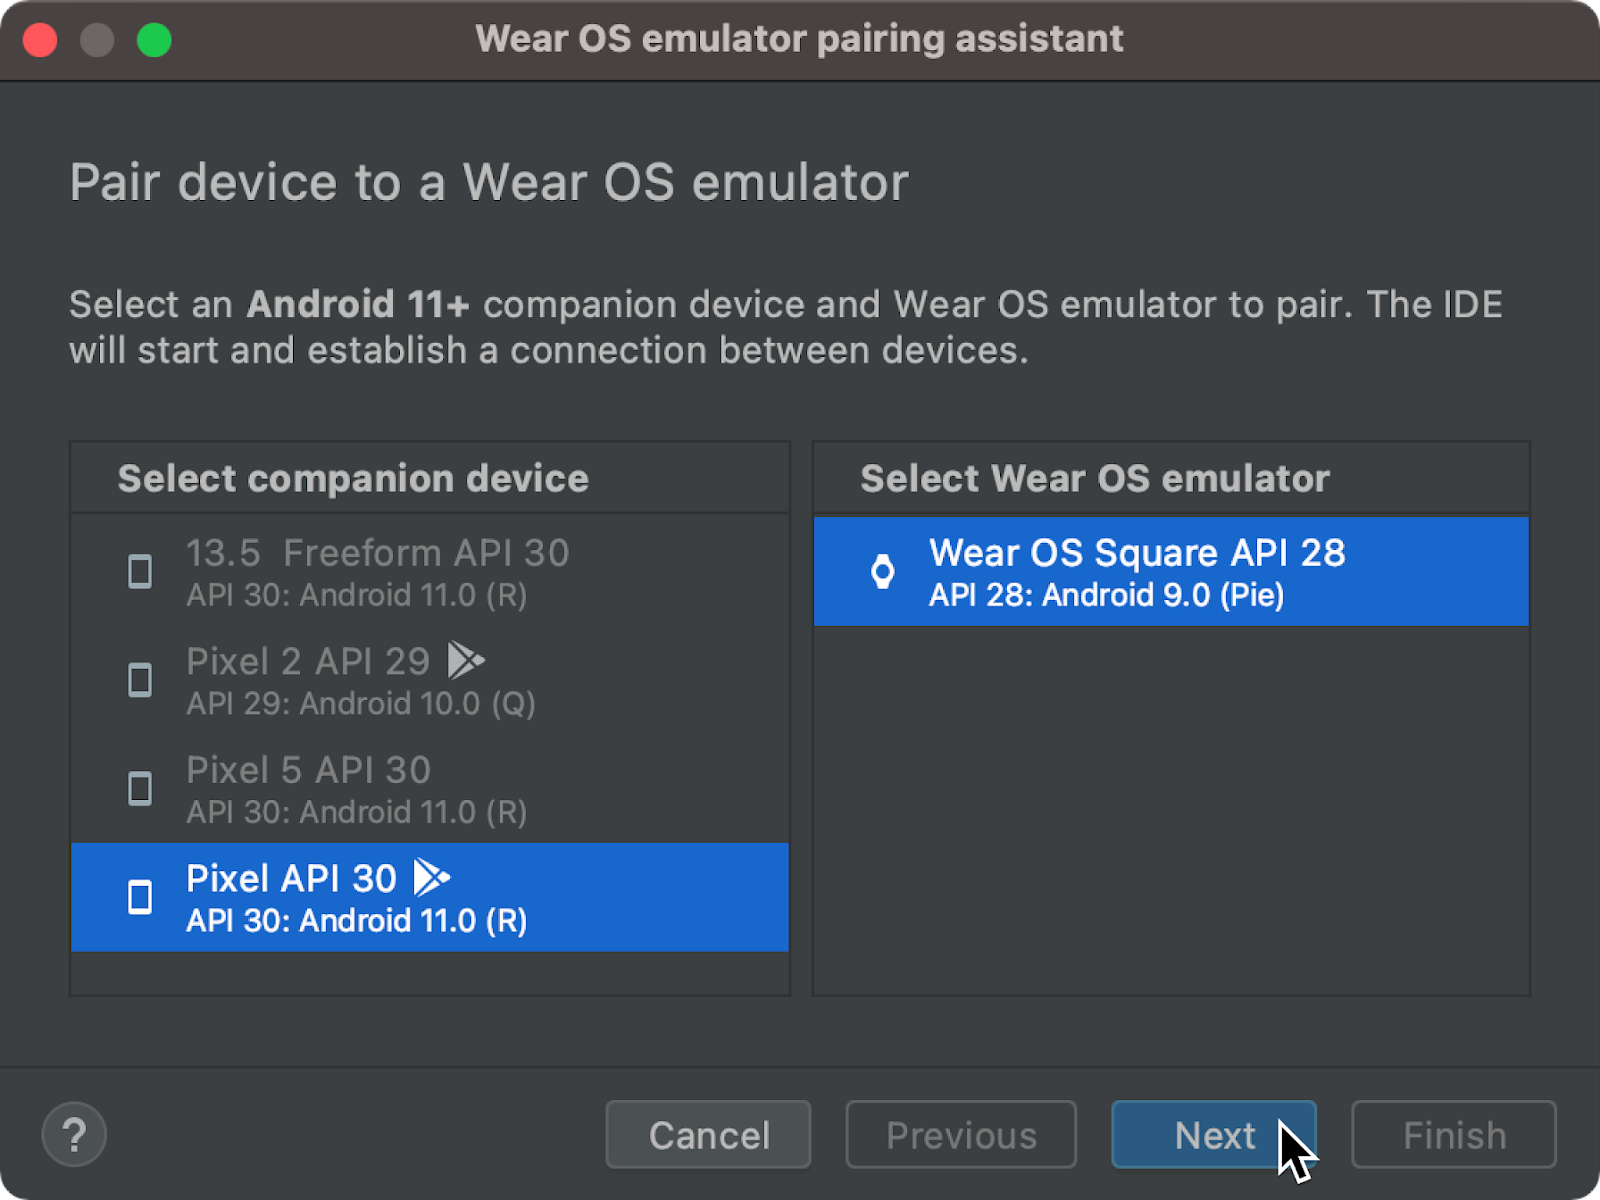   Wear OS emulator pairing assistant dialog 